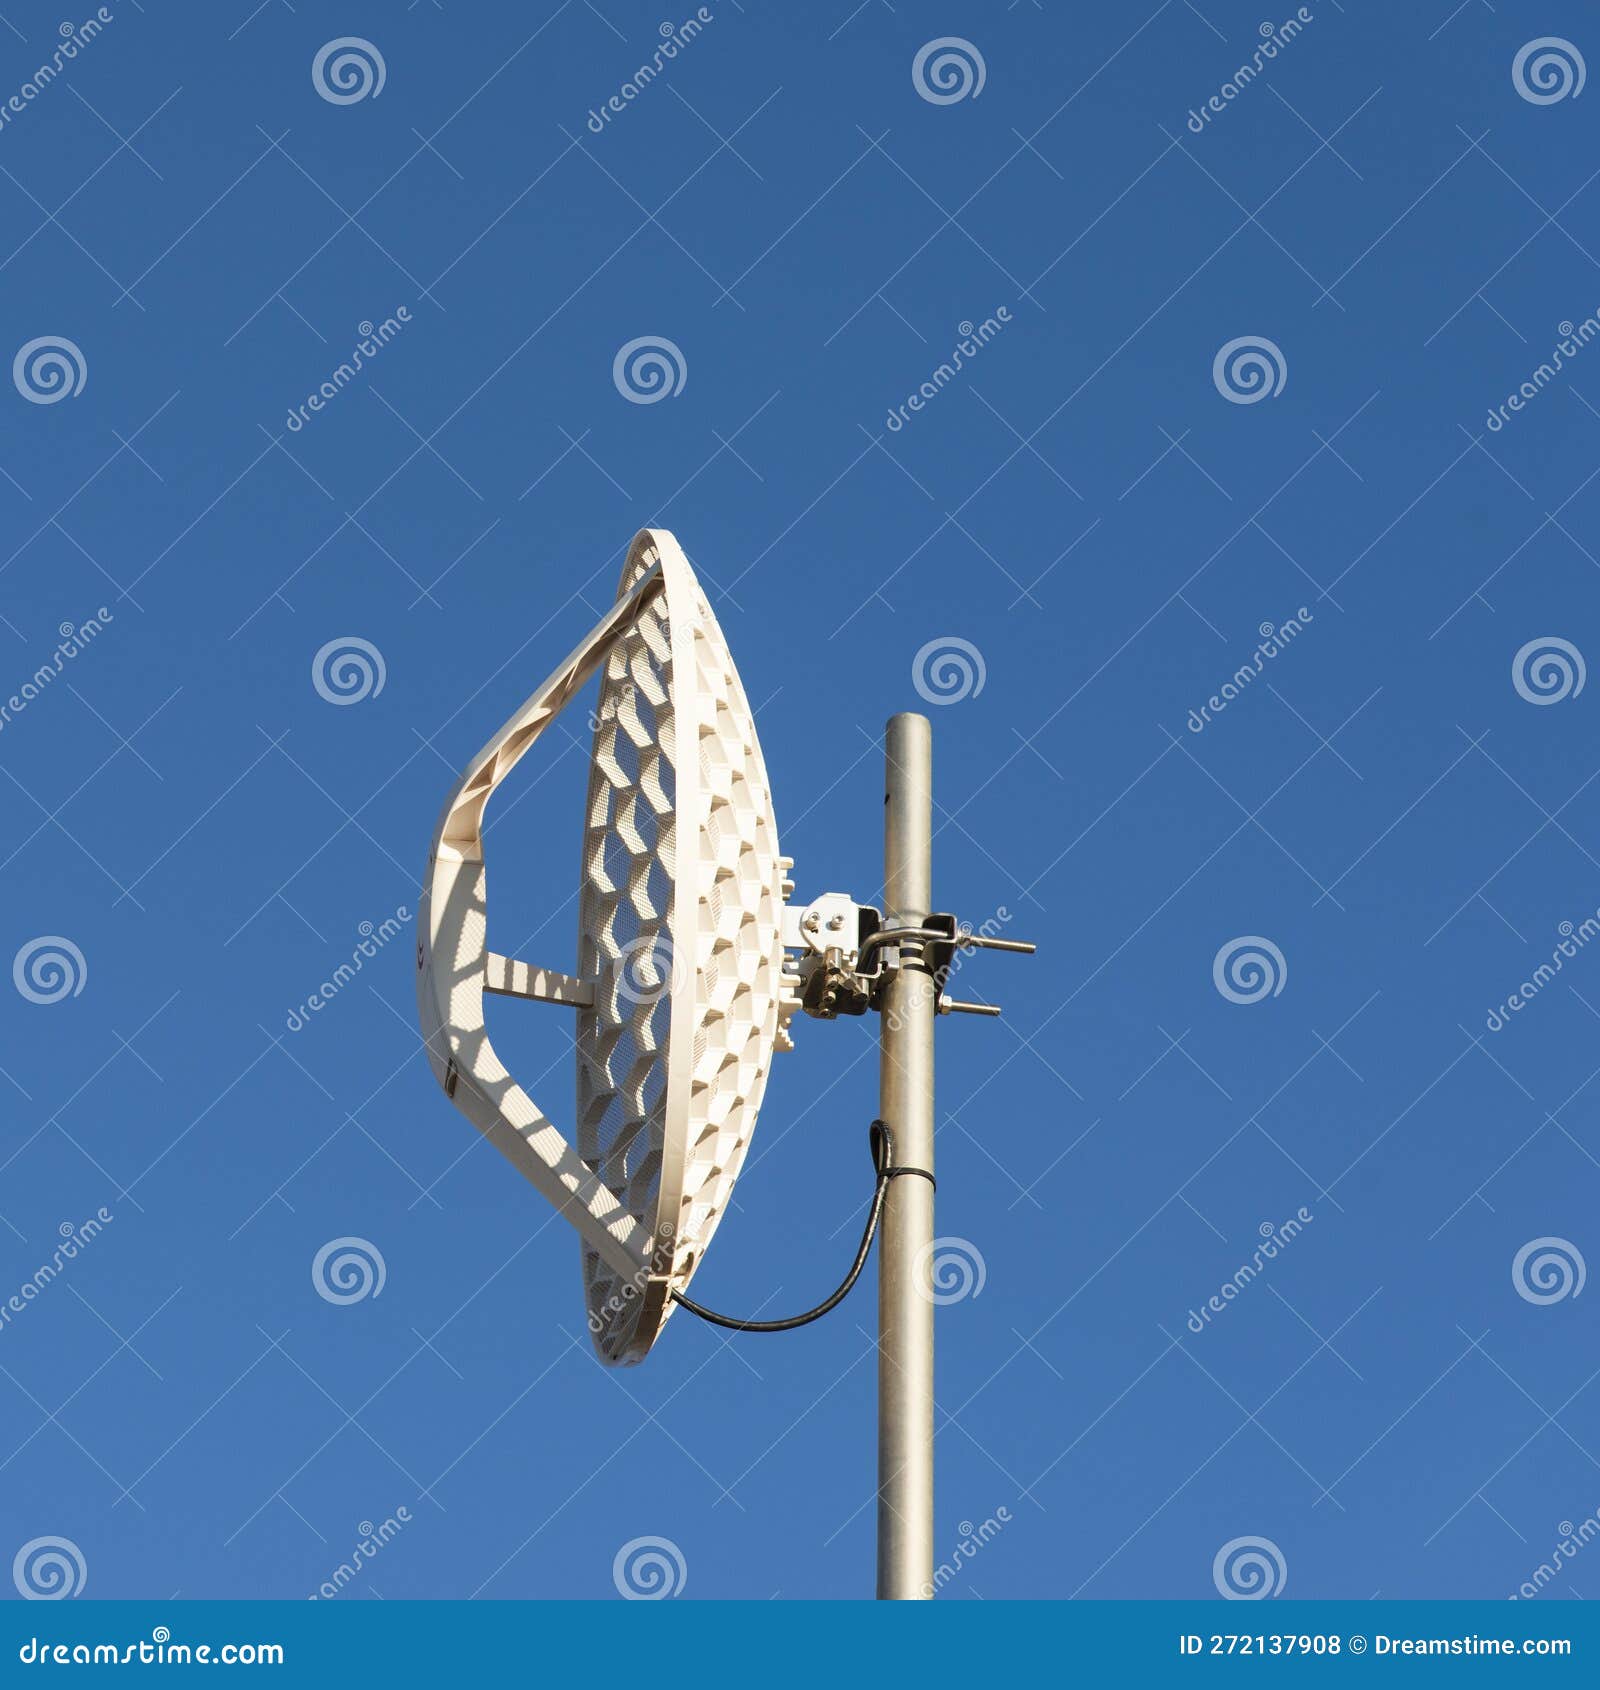 view of a mikrotik antenna